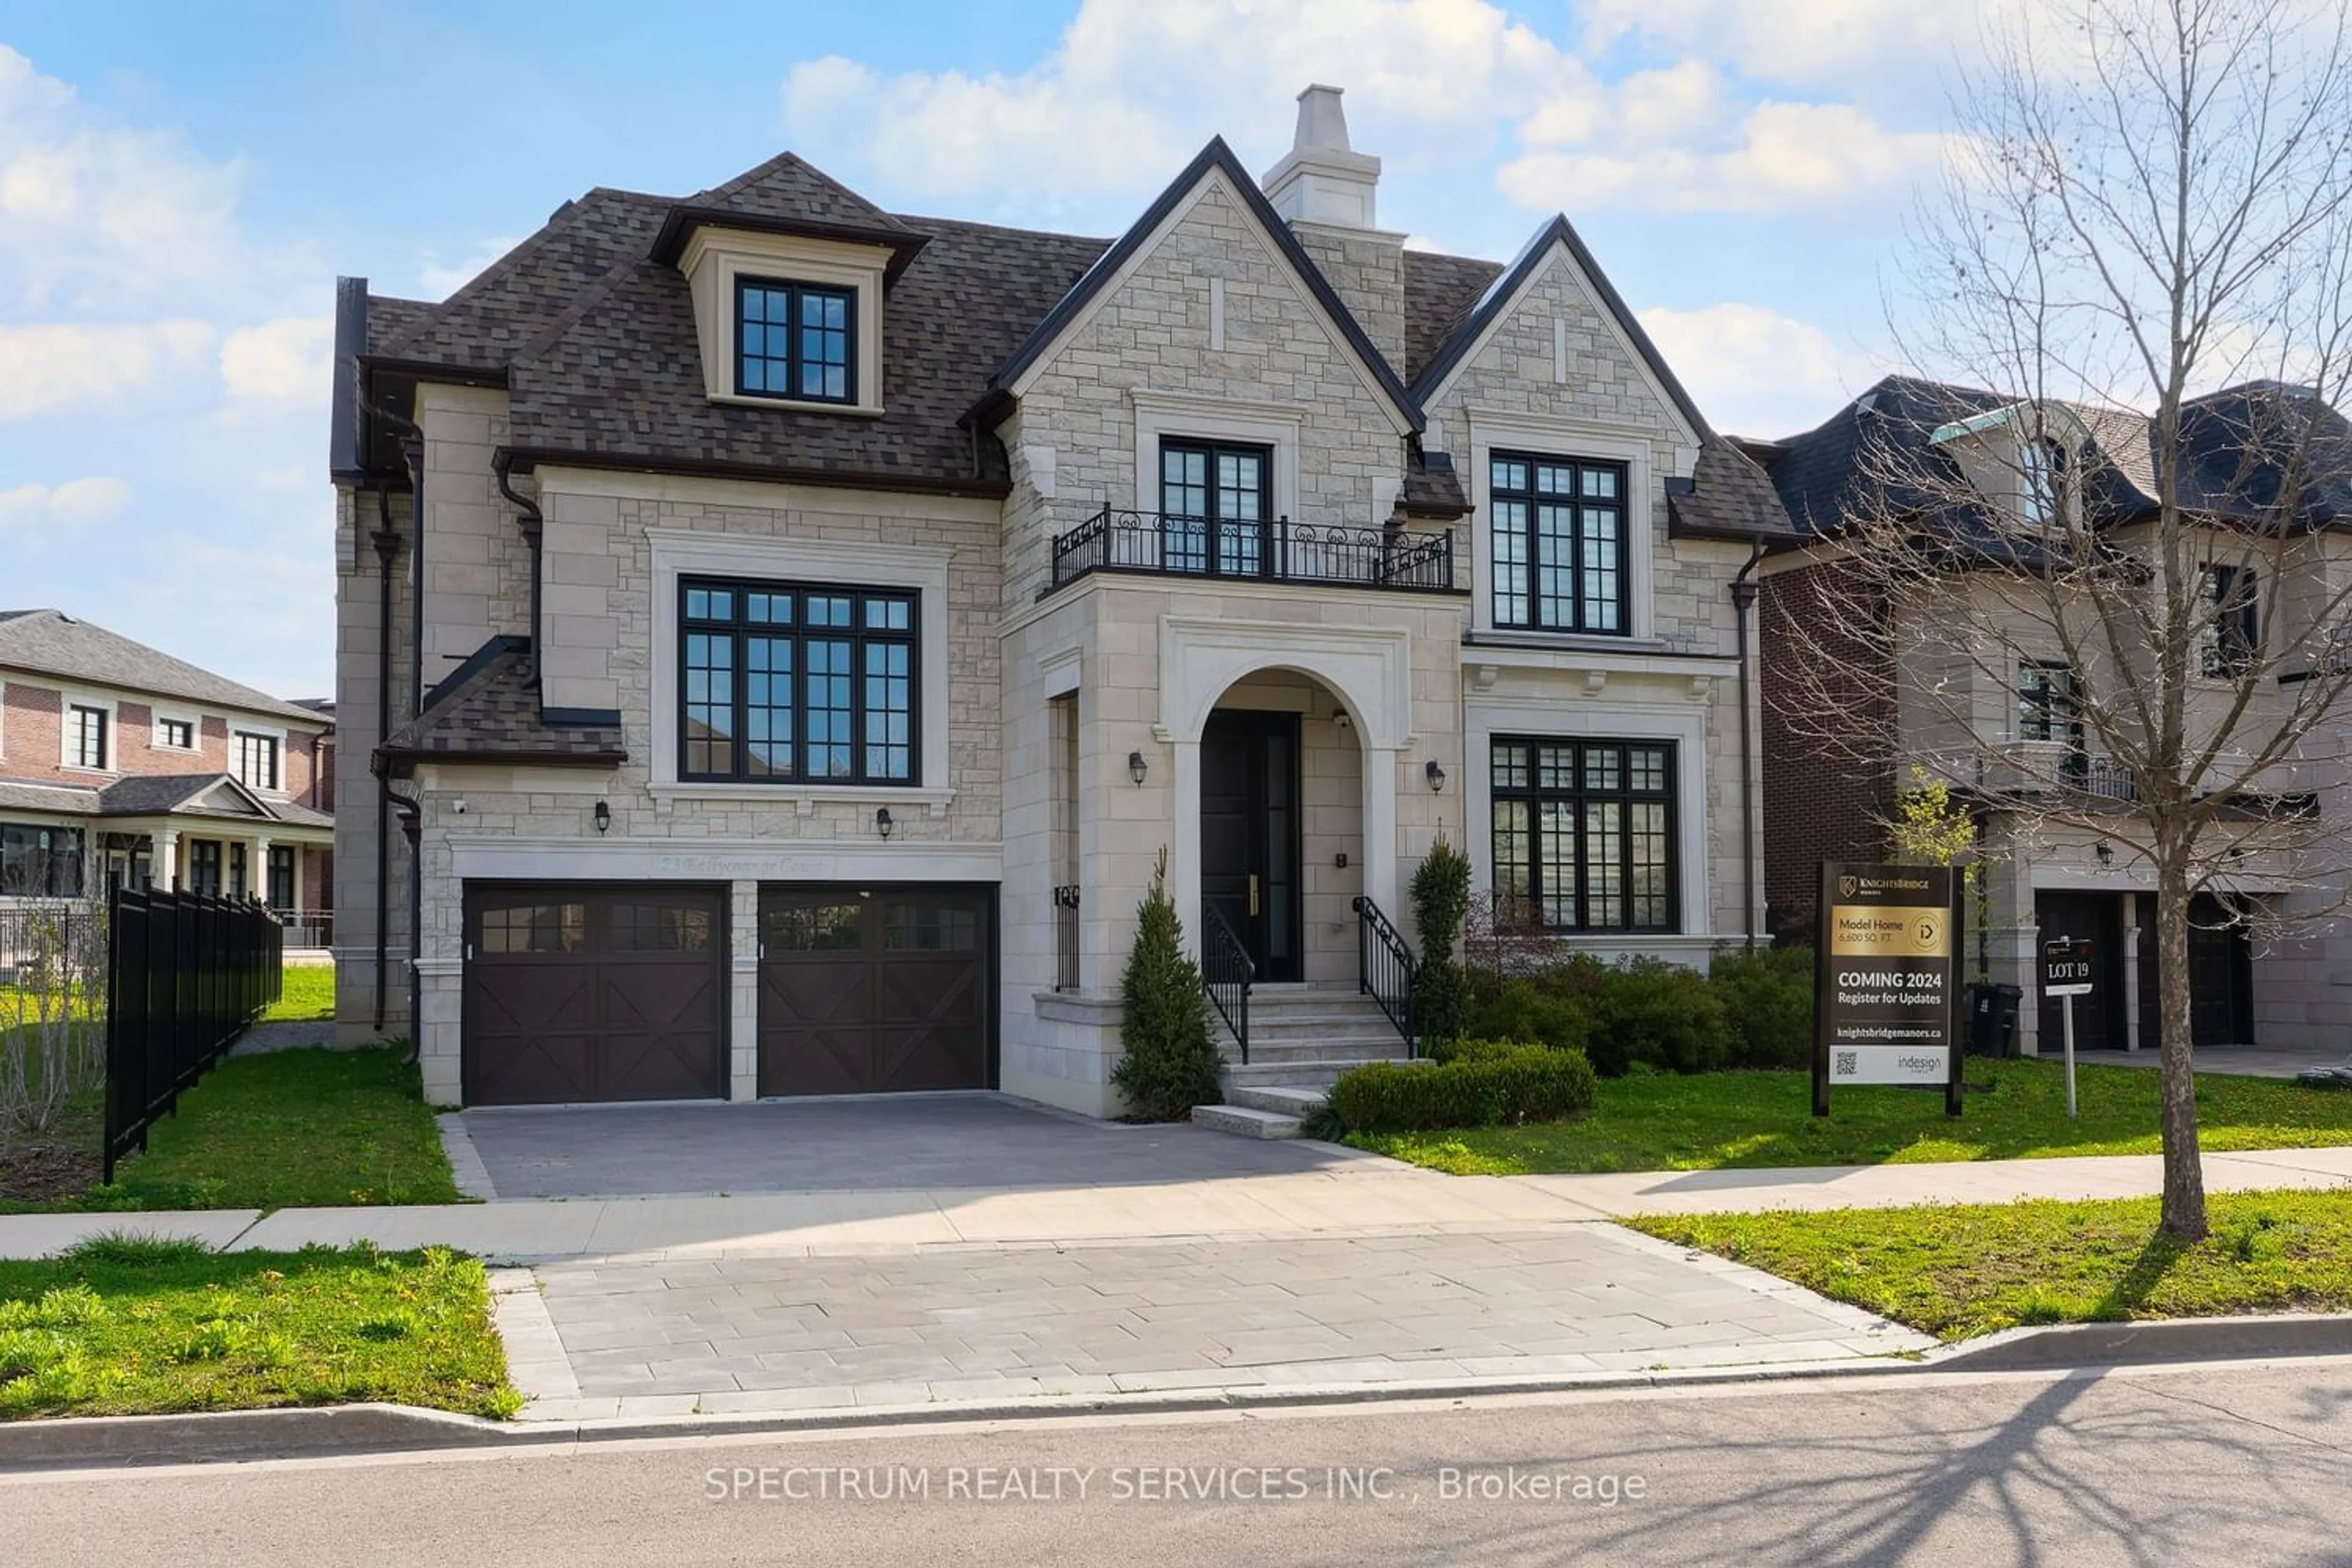 Home with brick exterior material for 23 Ballyconnor Crt, Toronto Ontario M2M 4C6